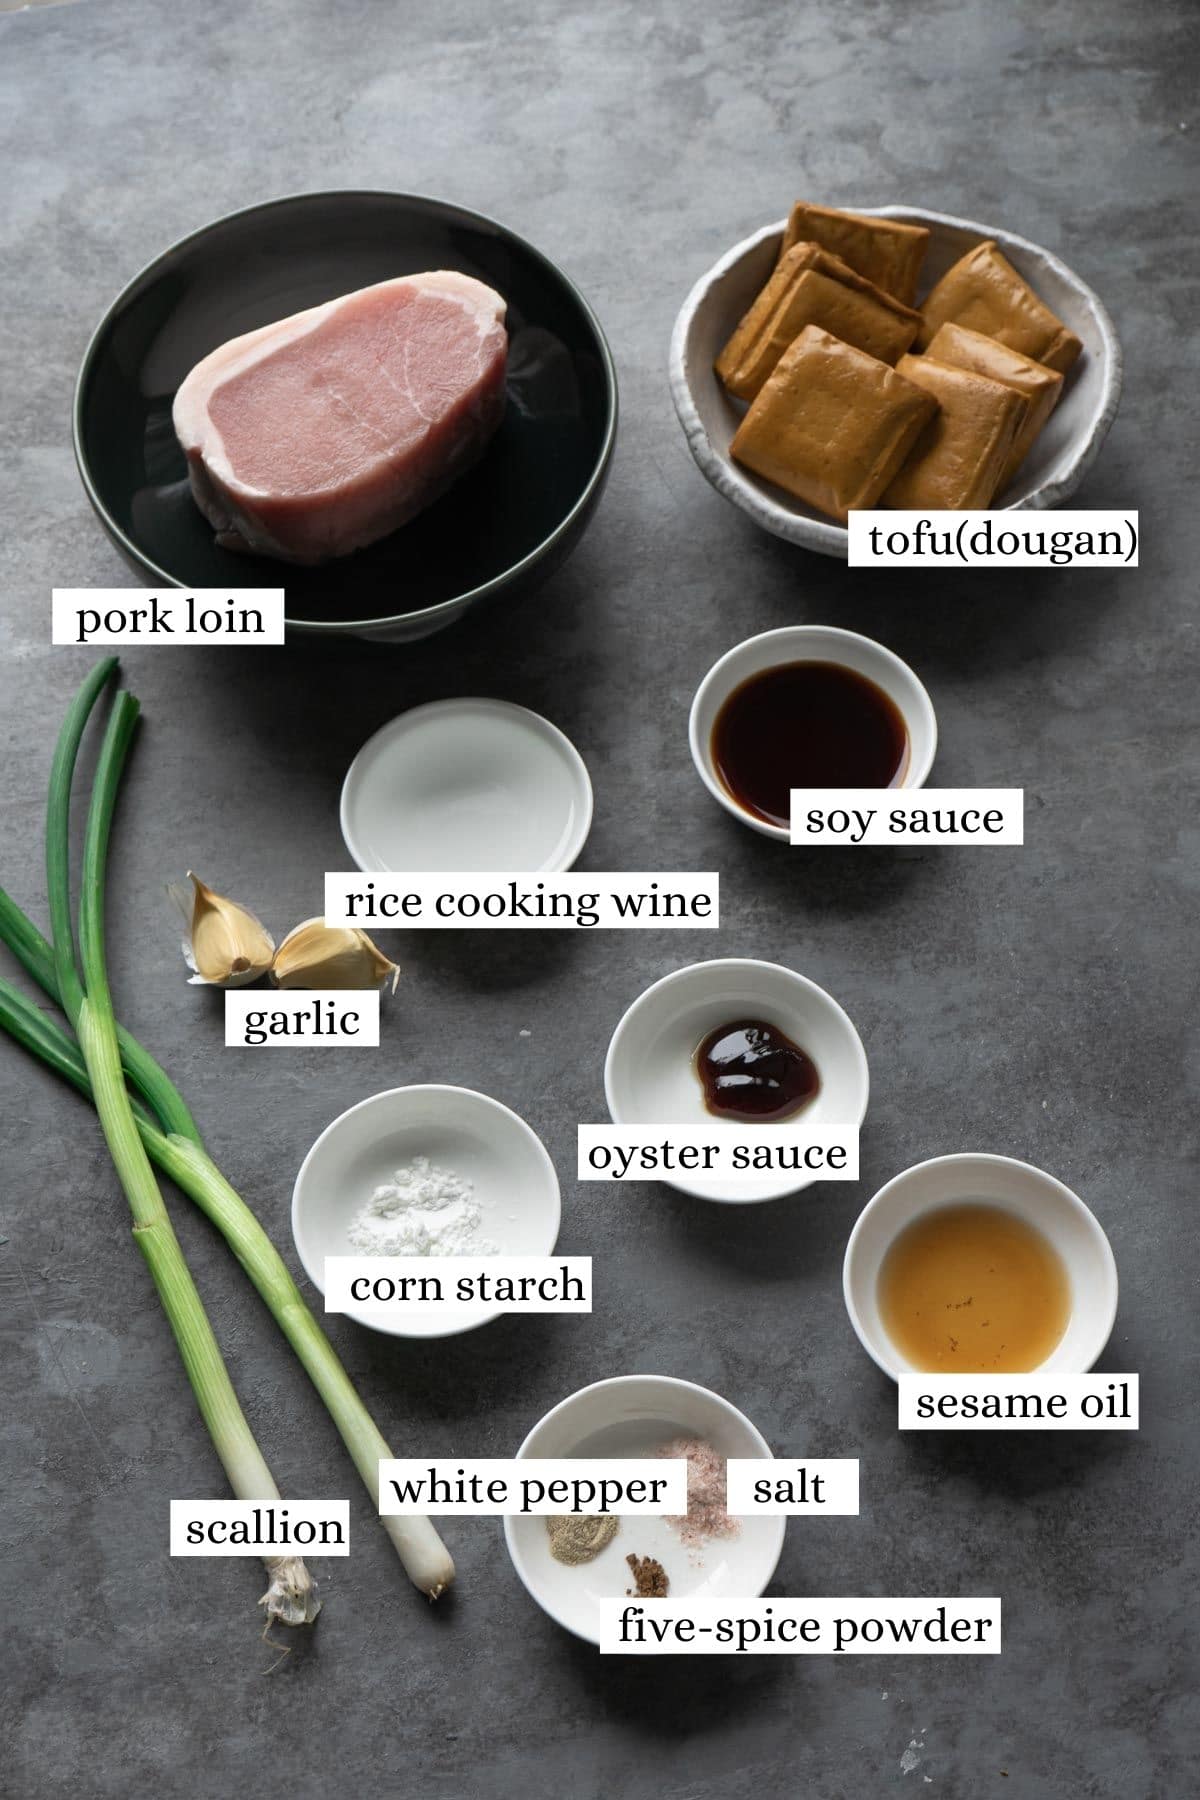 Ingredients for making pork and tofu stir fry, 